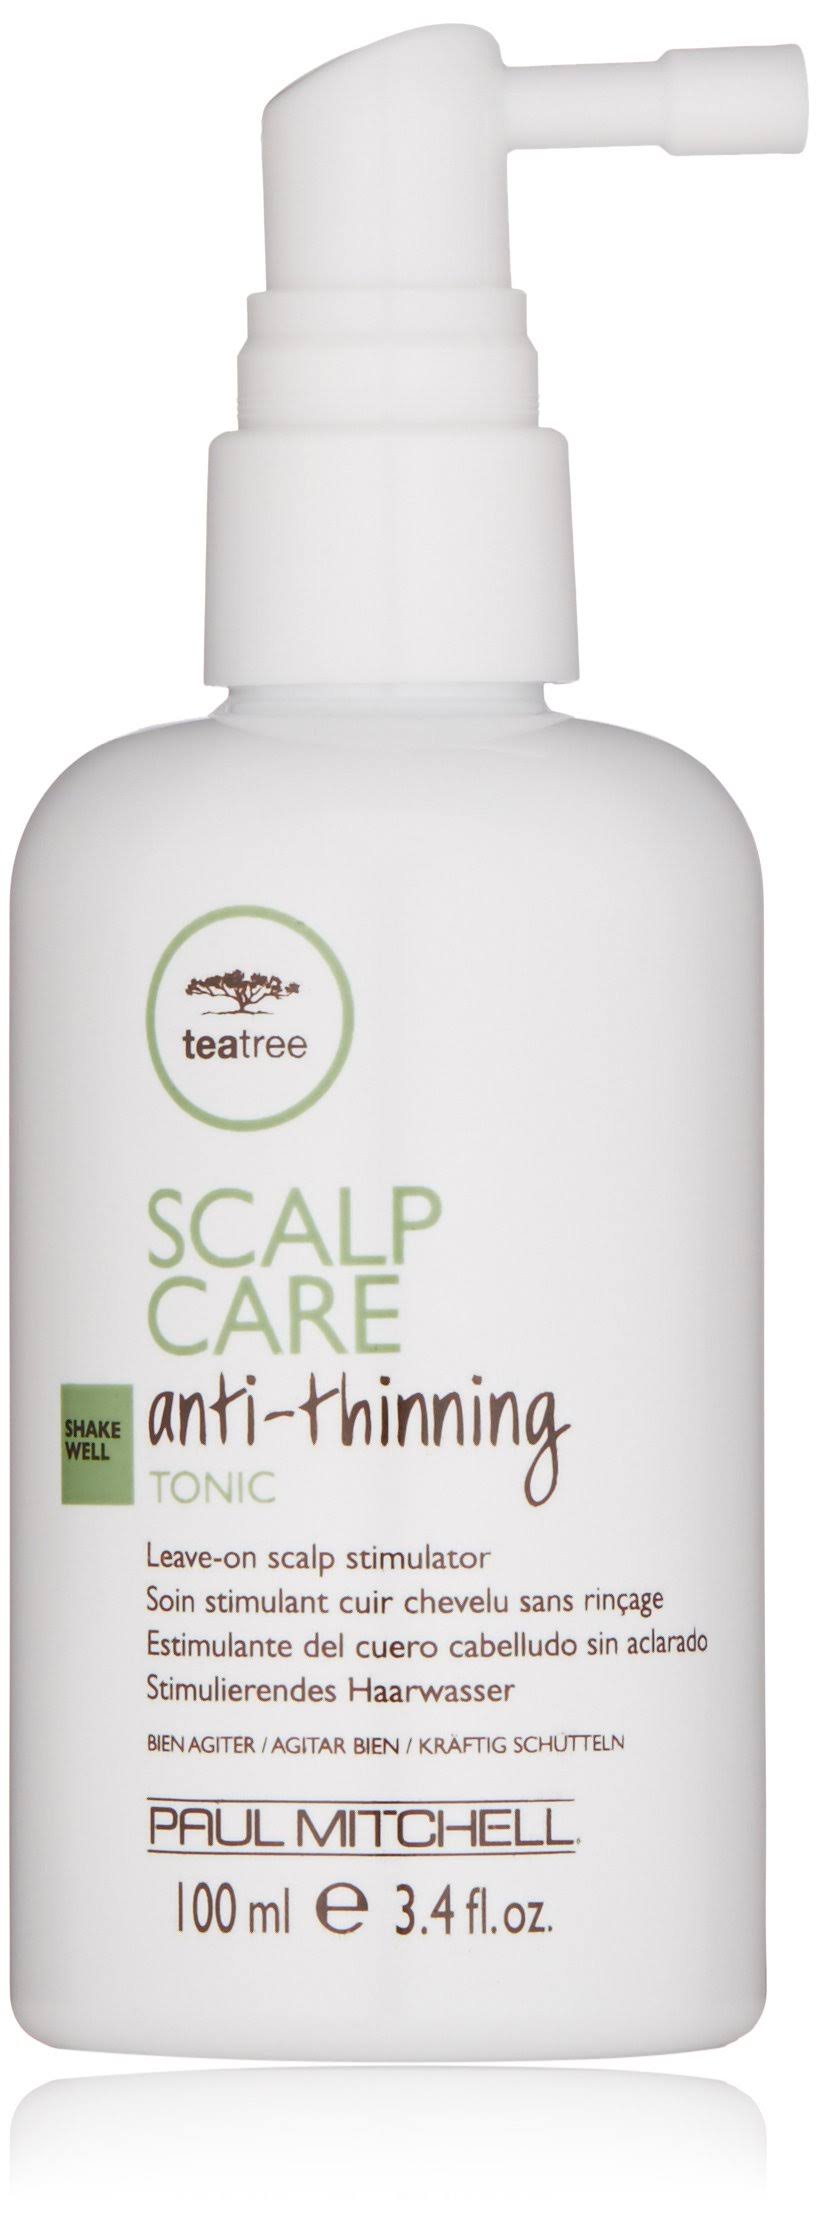 Paul Mitchell Tea Tree Scalp Care Anti-Thinning Tonic - 3.4oz